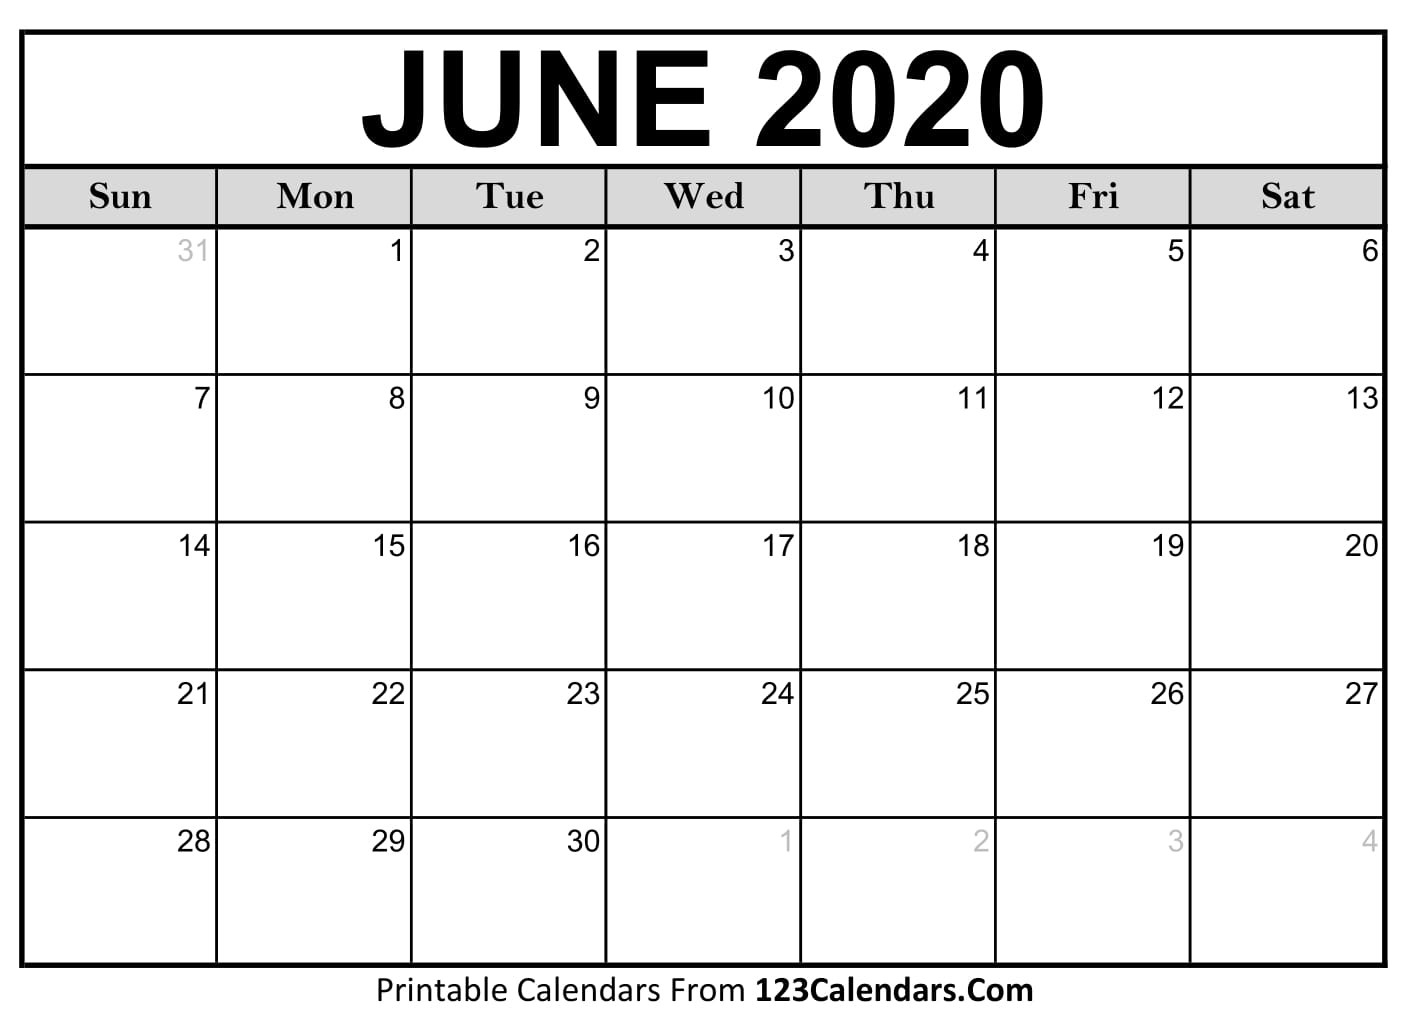 June 2020 Printable Calendar | 123Calendars-Blank Calendarjune 2020 Printable Monthly